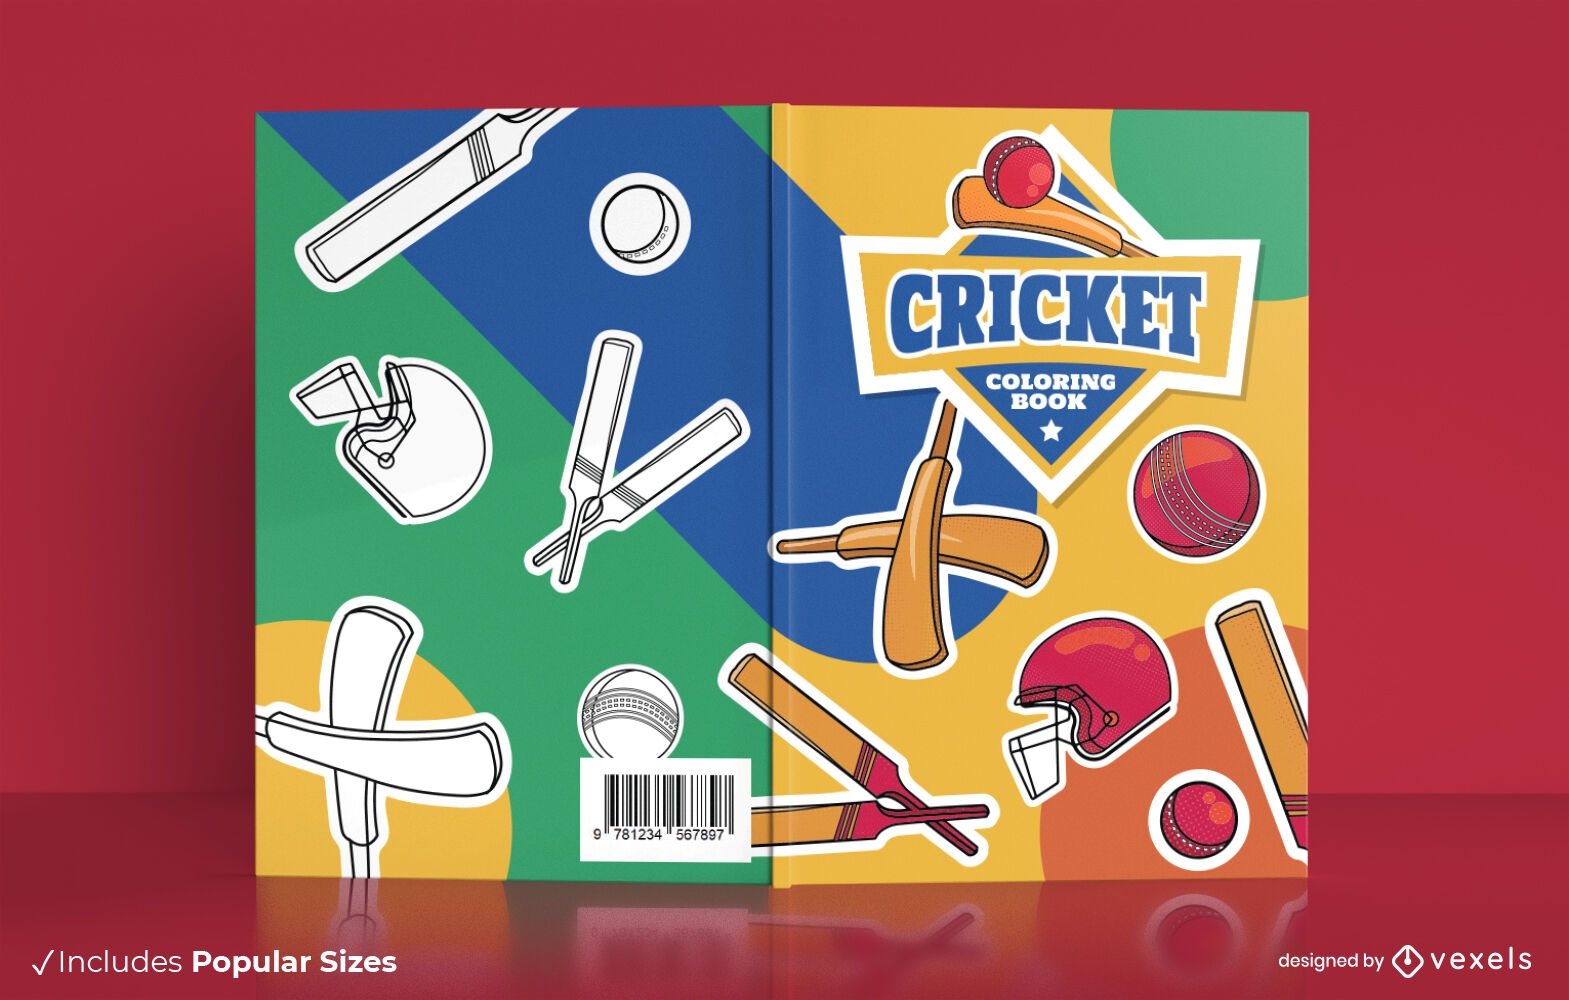 Cricket coloring book cover design